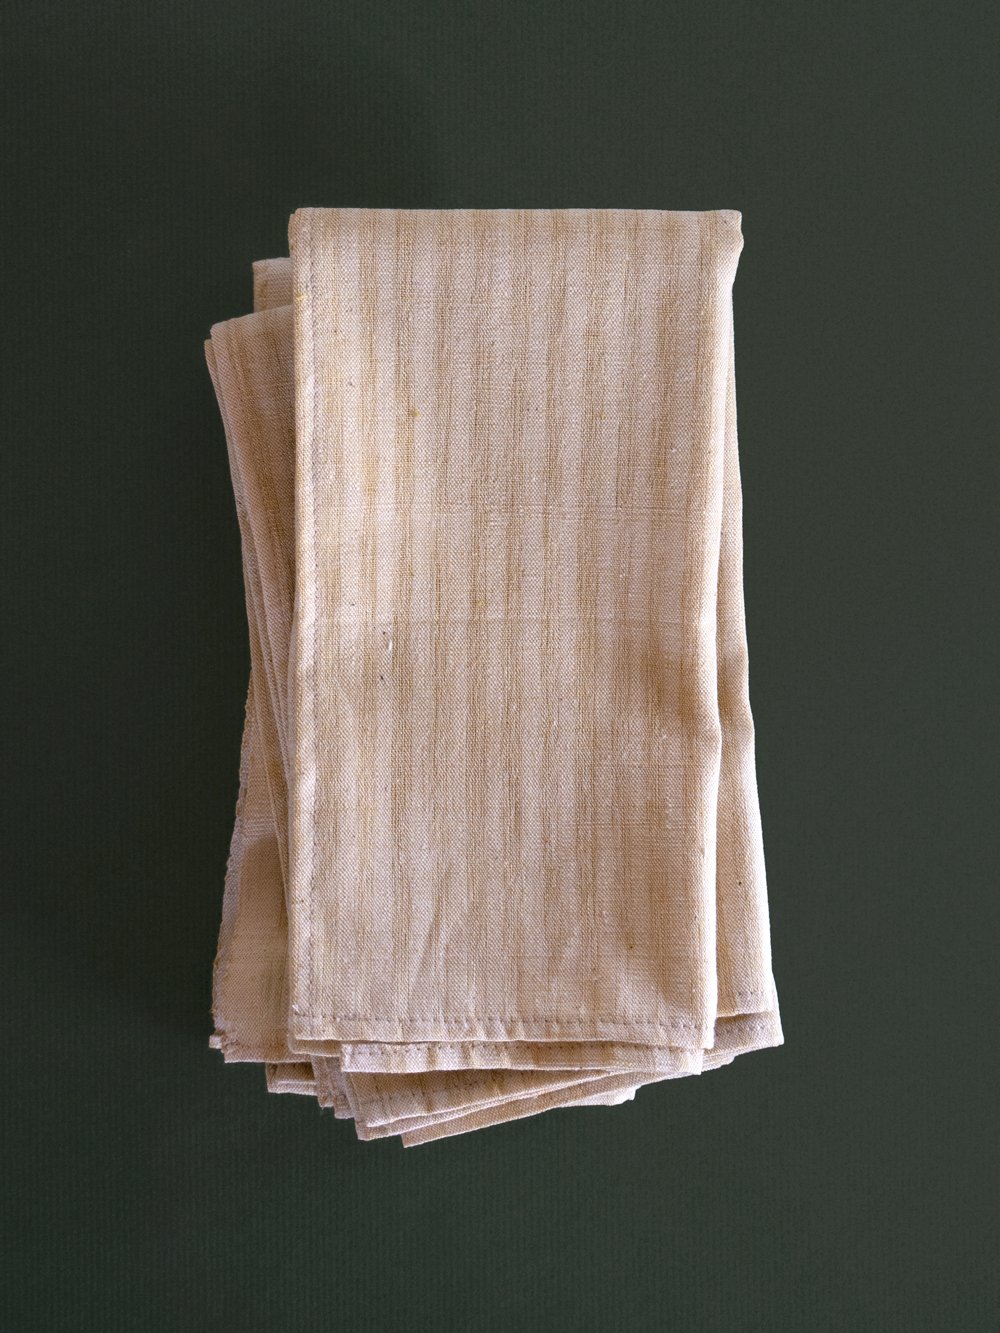 Image of table napkins